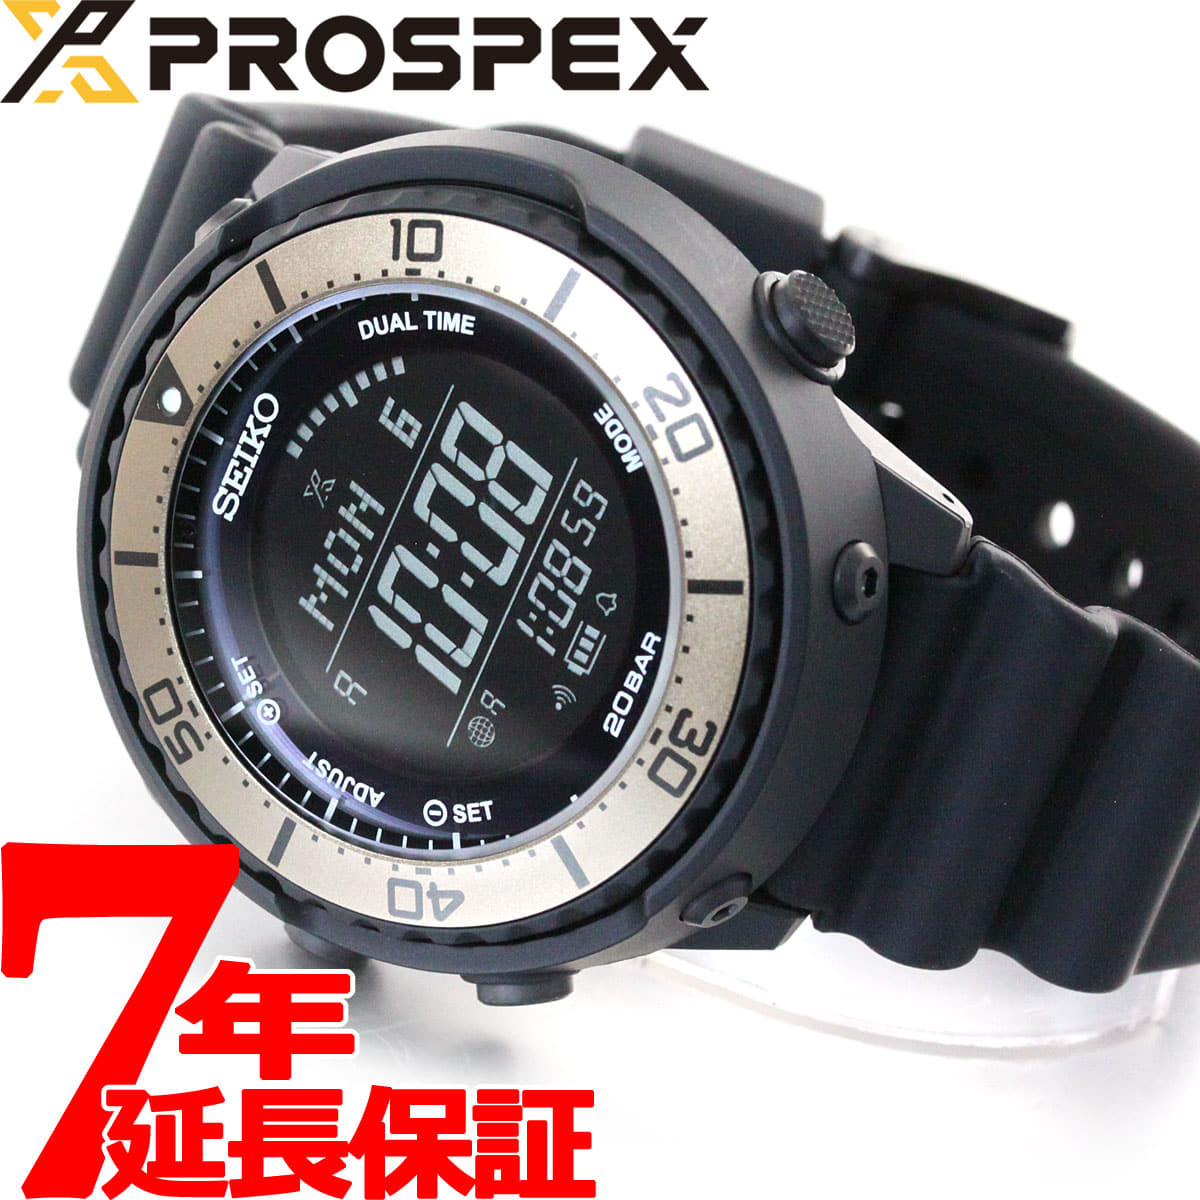 New] SEIKO PROSPEX FIELDMASTER LOWERCASE produce solar Men's Watch SBEP025  - BE FORWARD Store